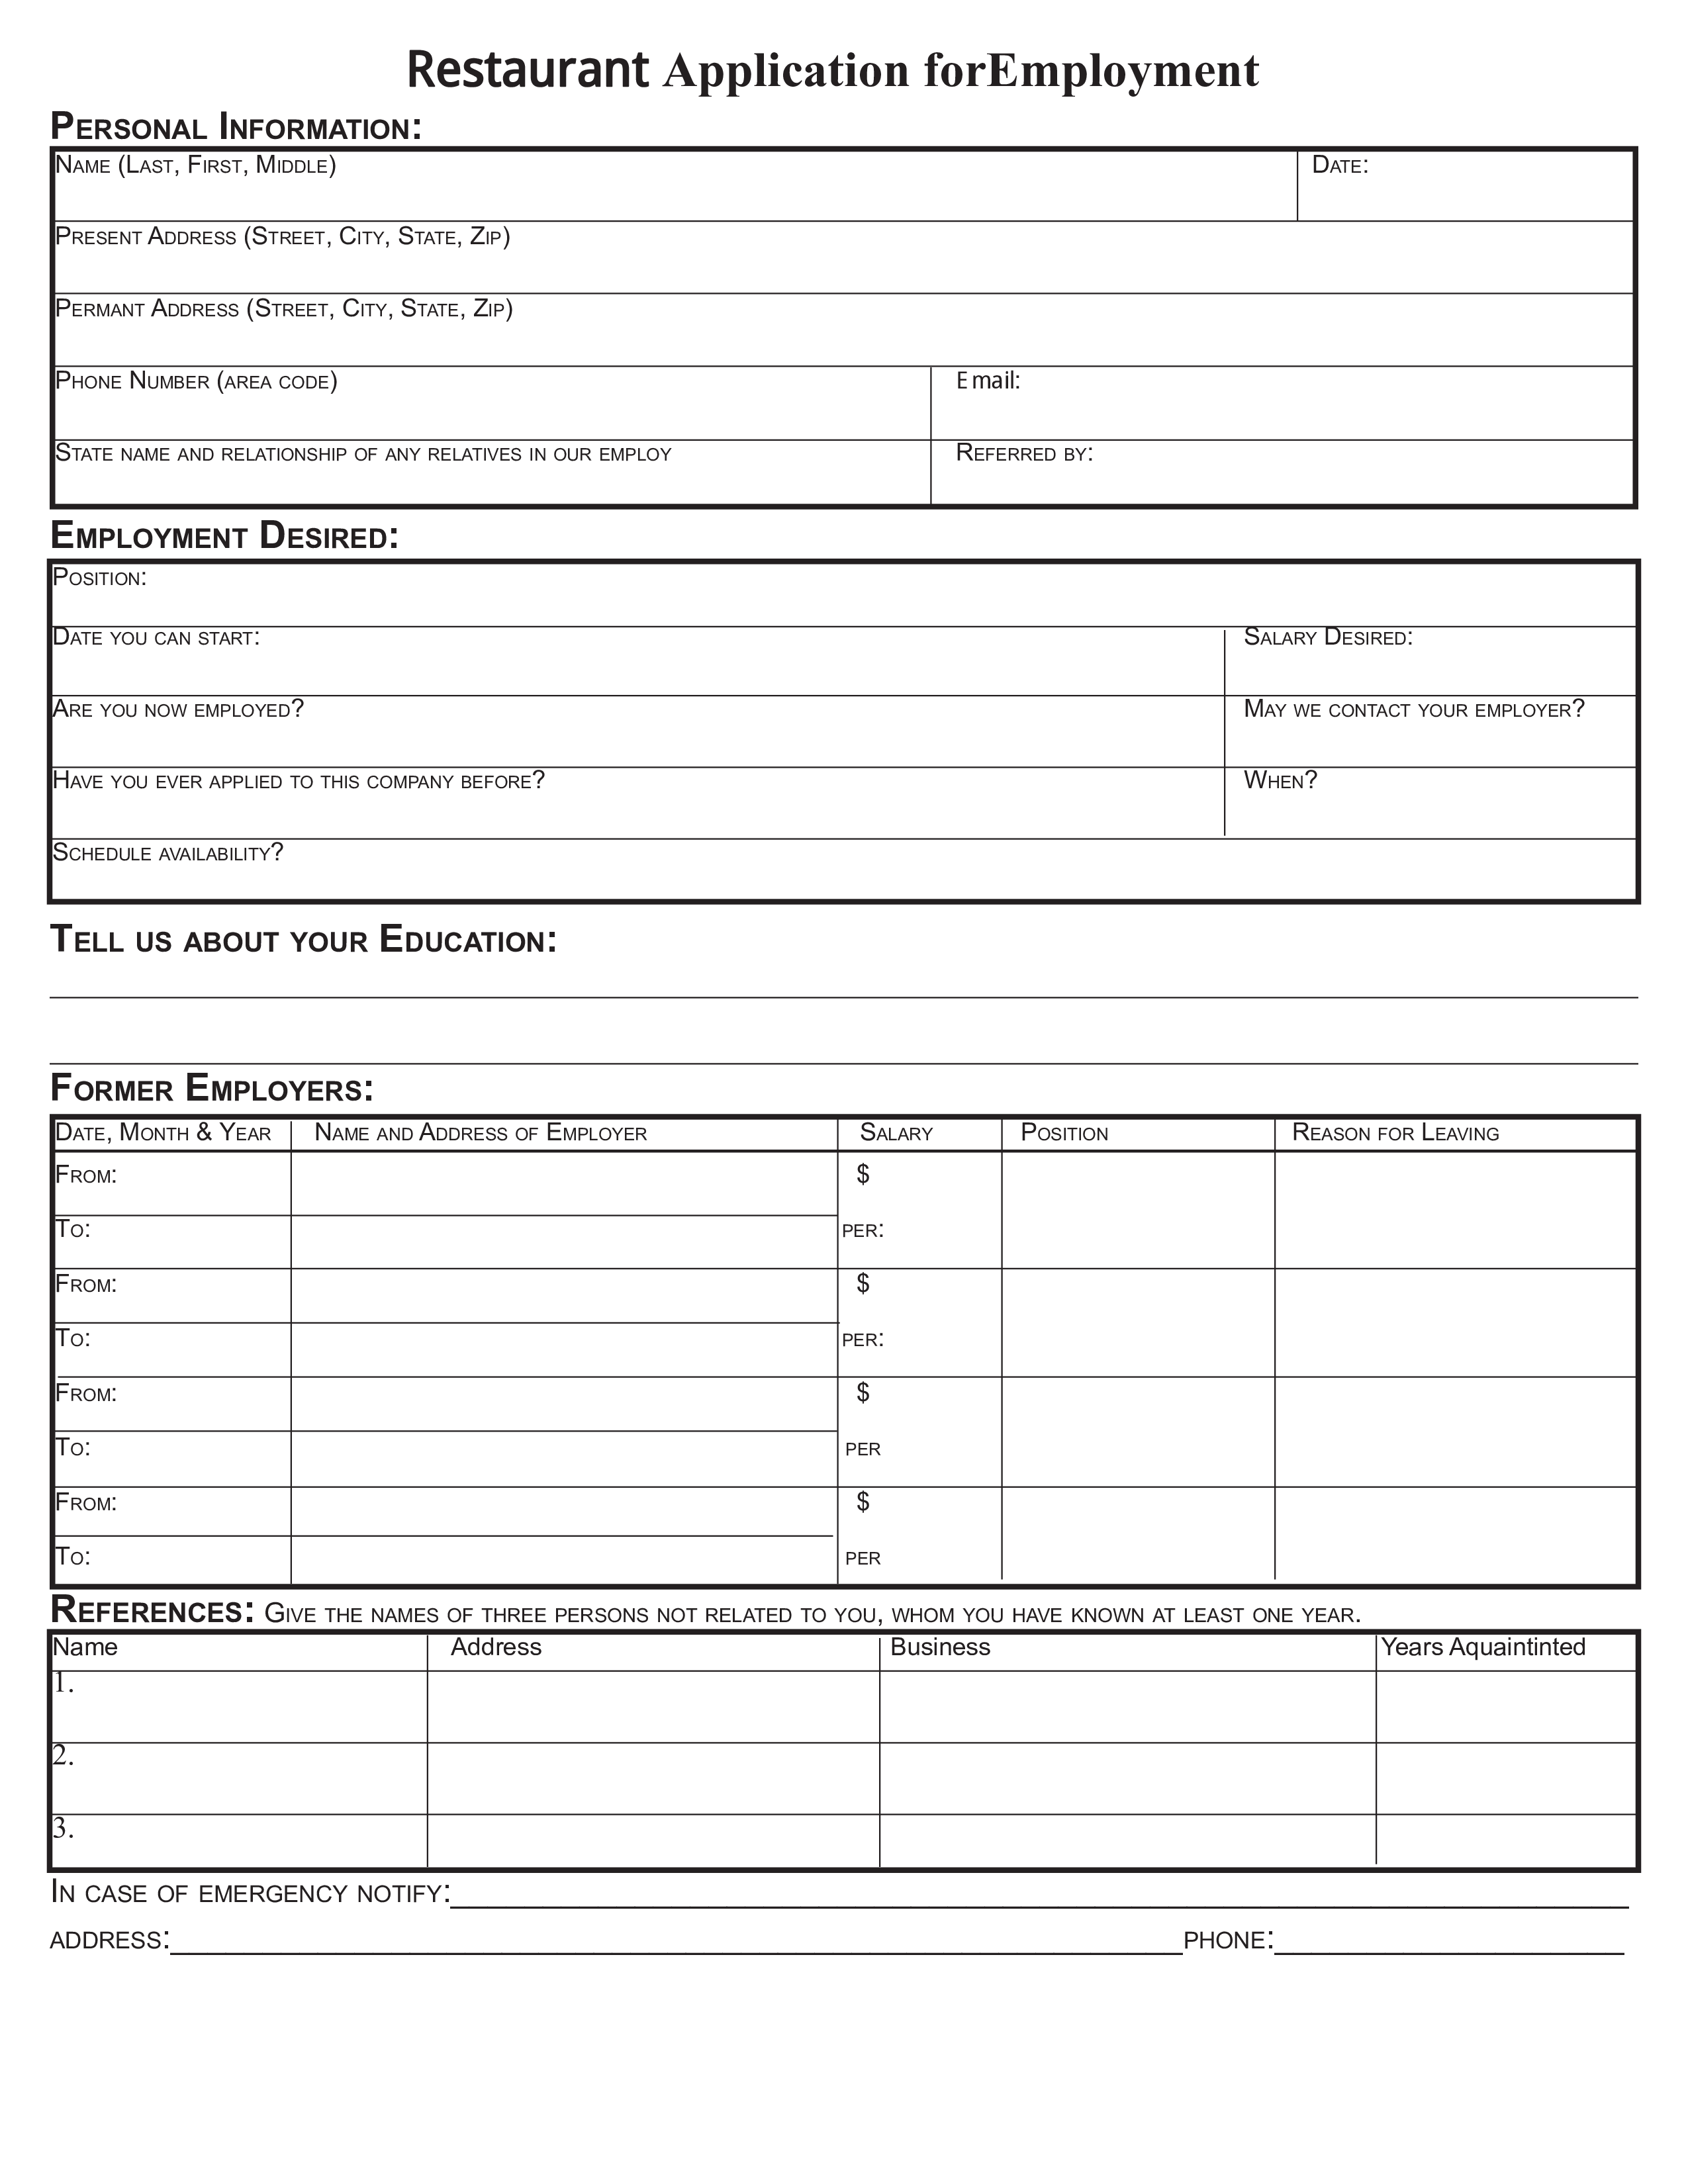 restaurant job application form template